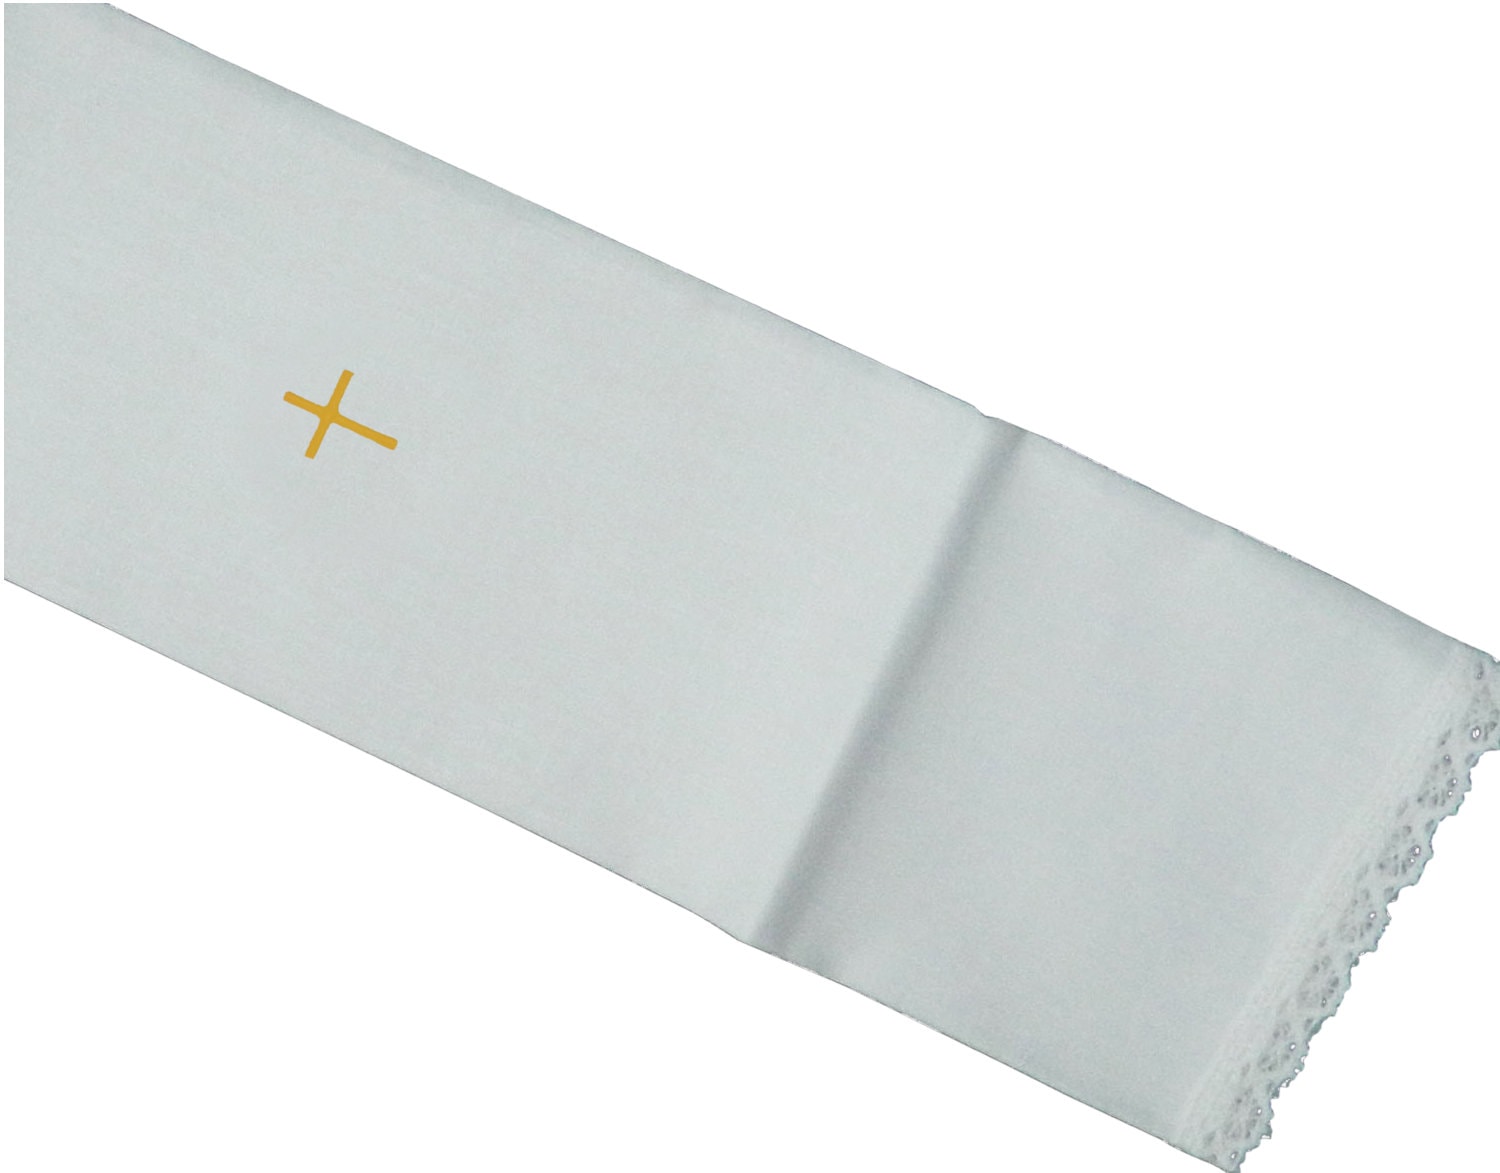 Purificador para altar con Cruz bordada | Paño de altar blanco